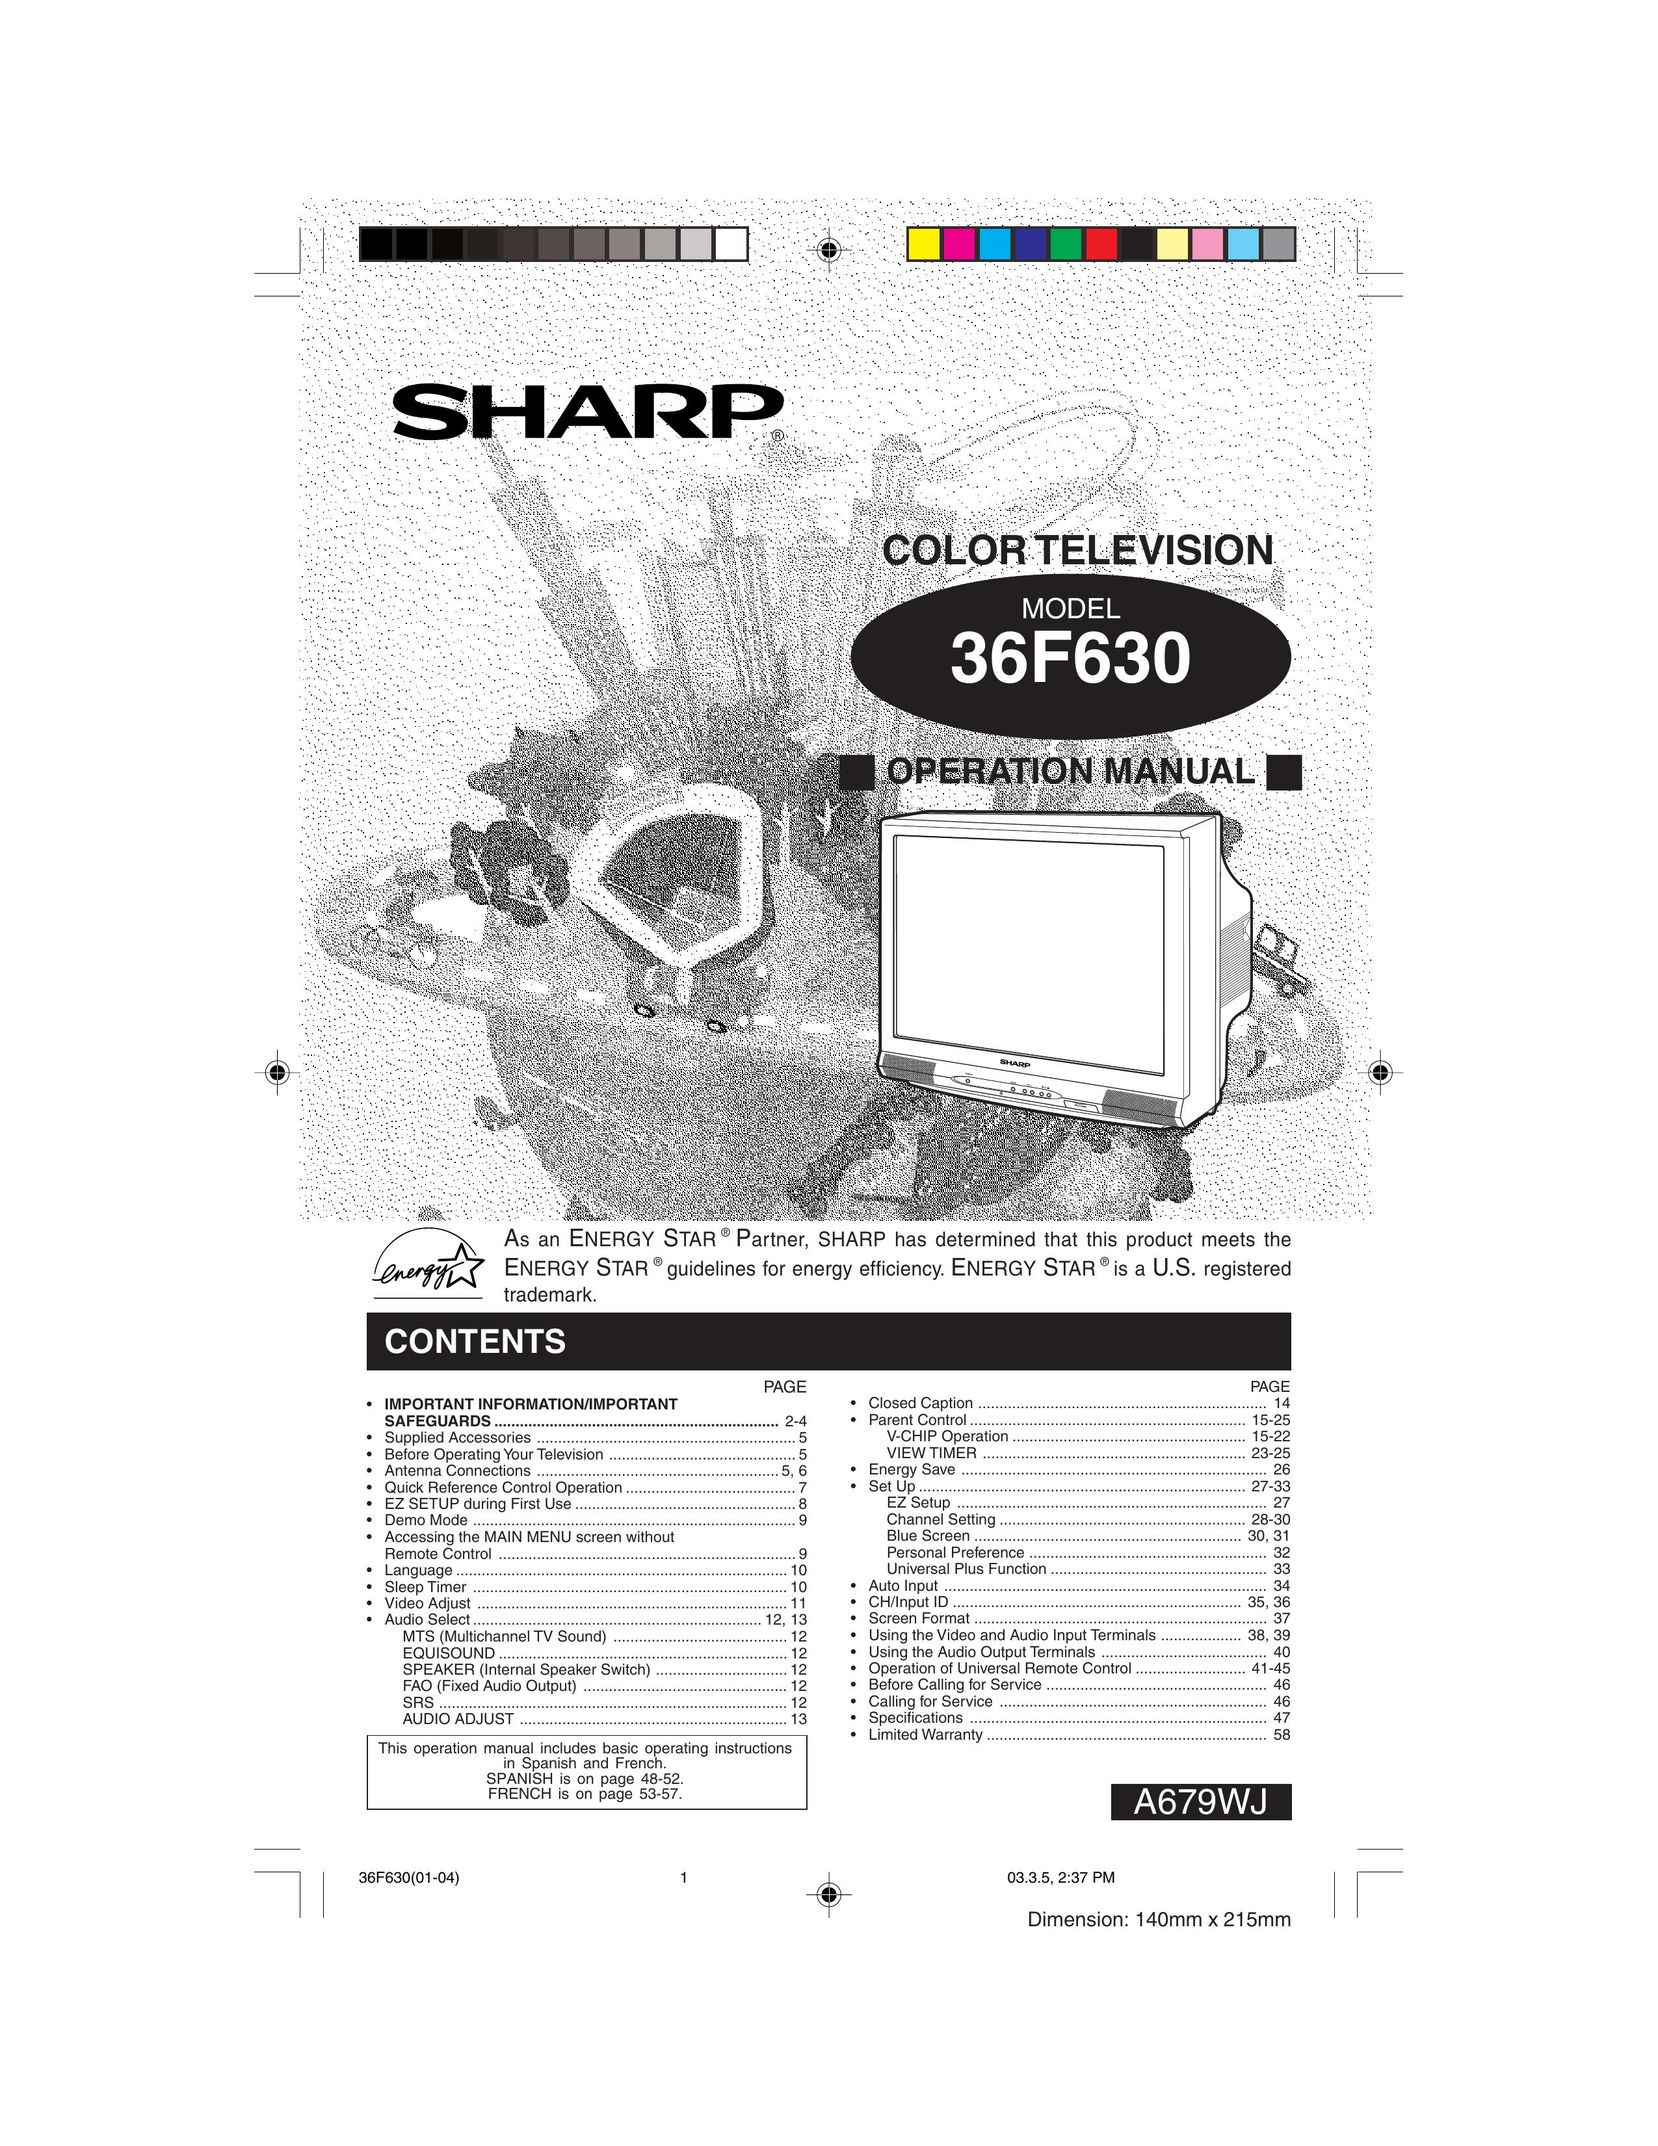 Sharp 36F630 CRT Television User Manual